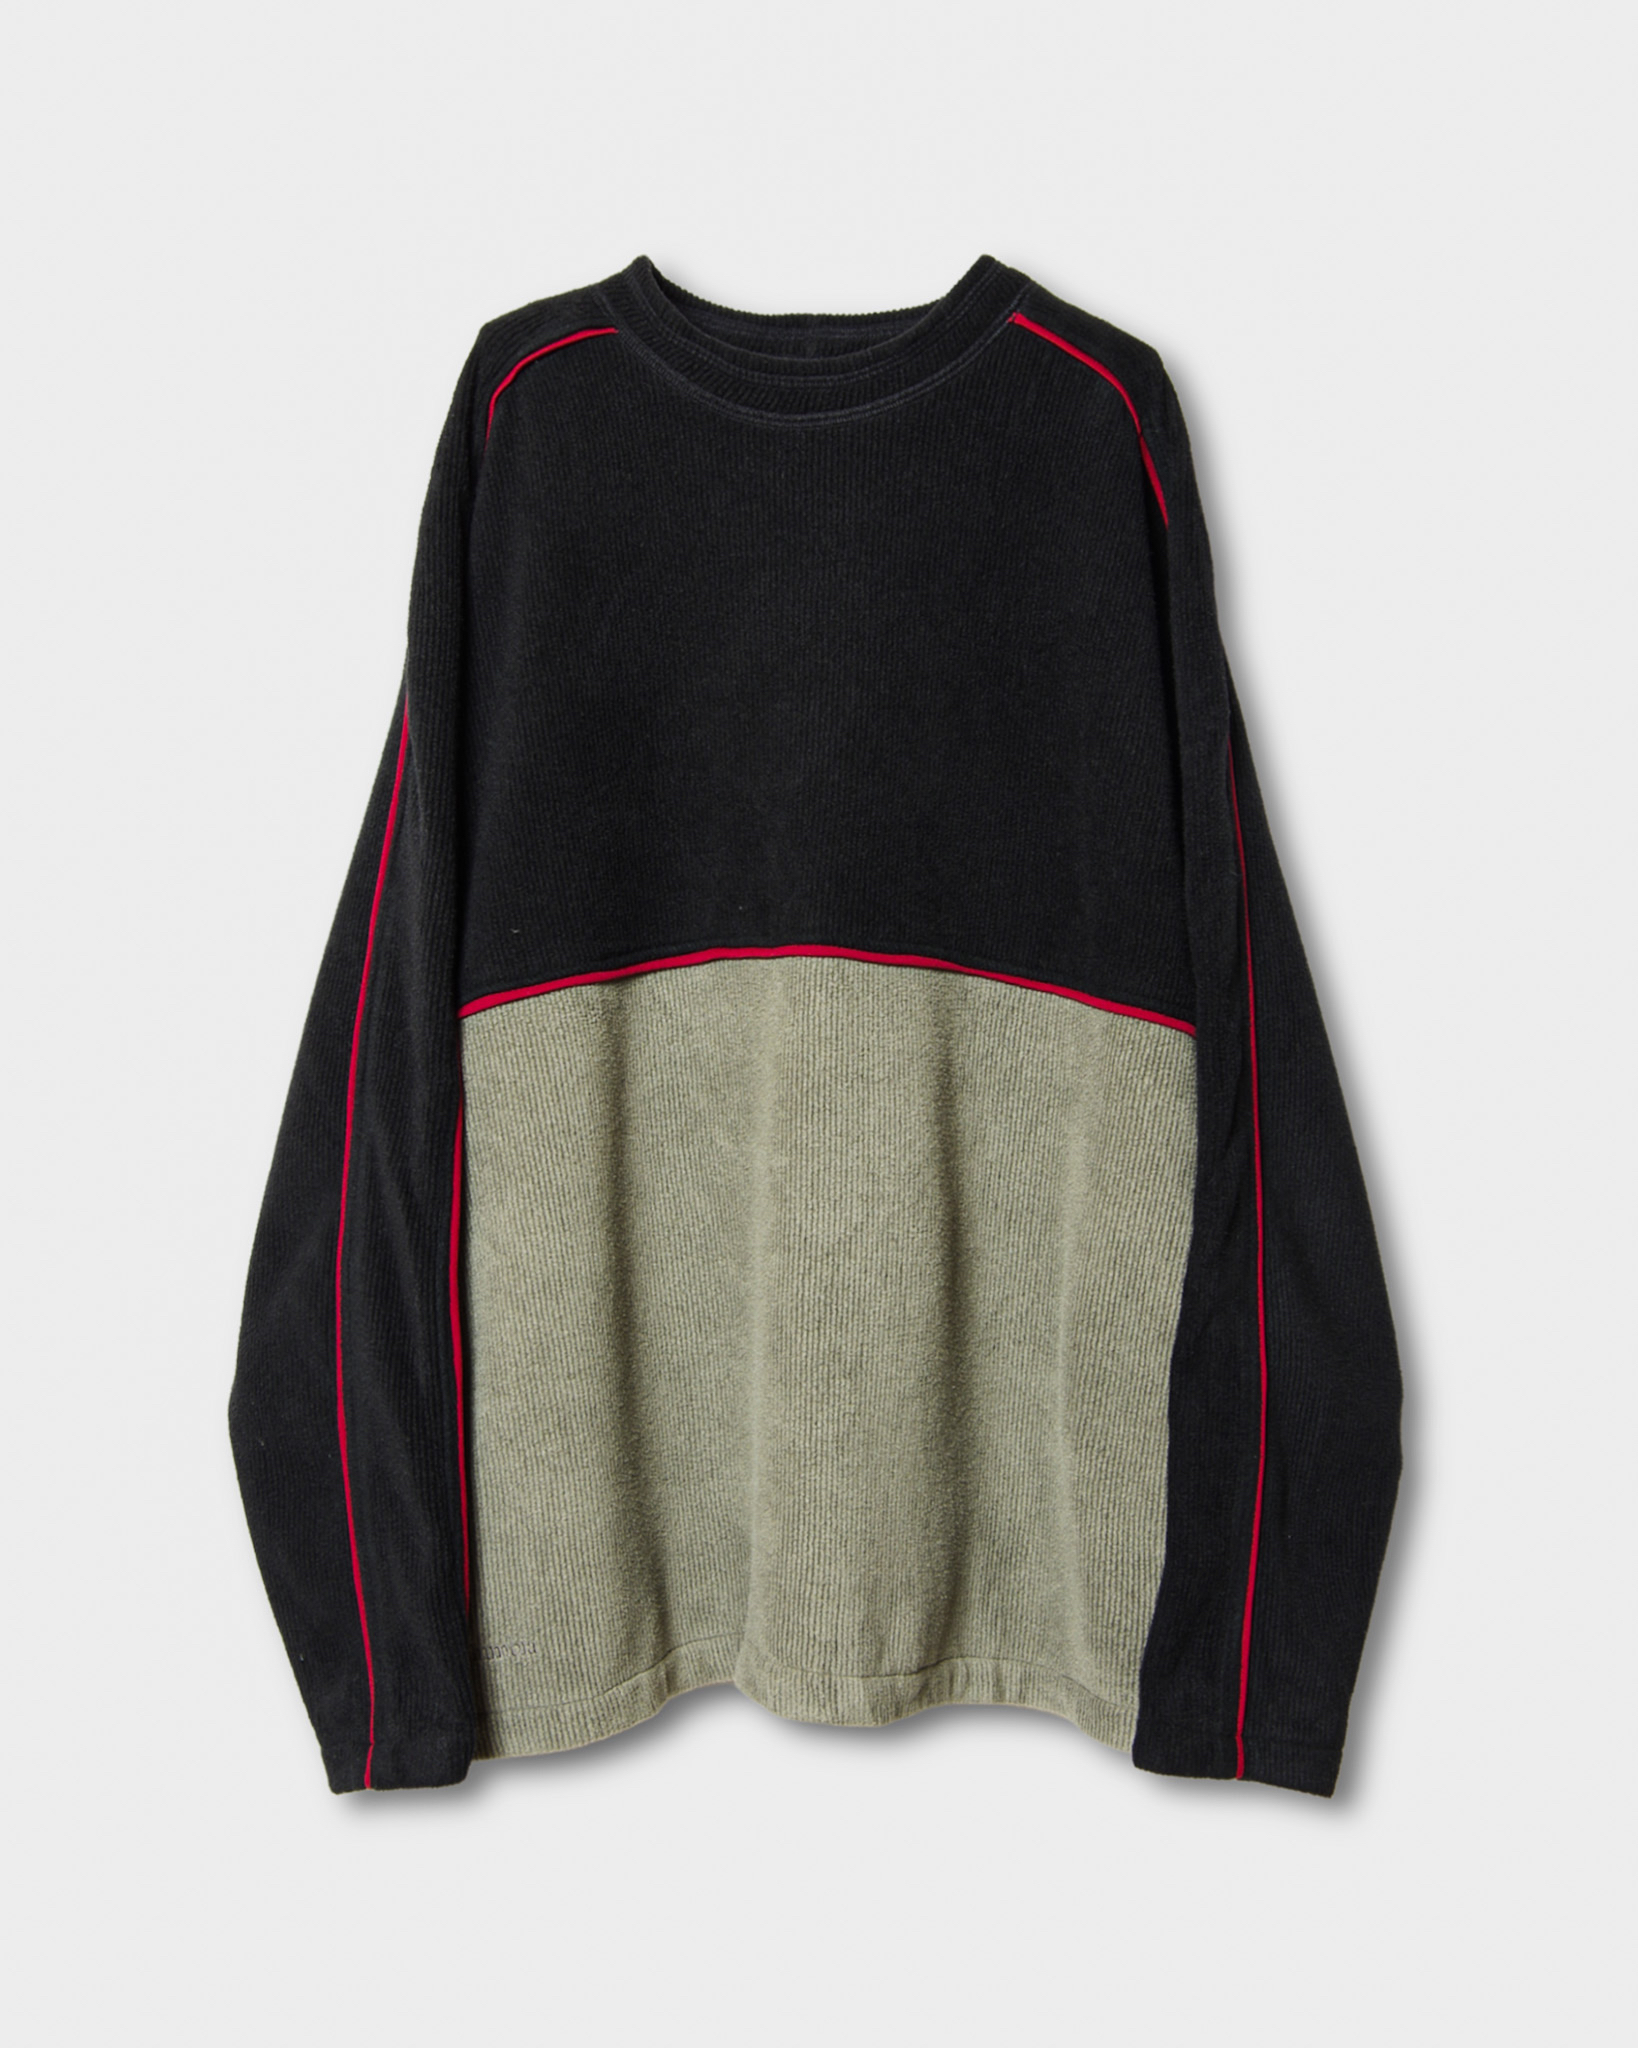 90's "Columbia" Fleece Pullover